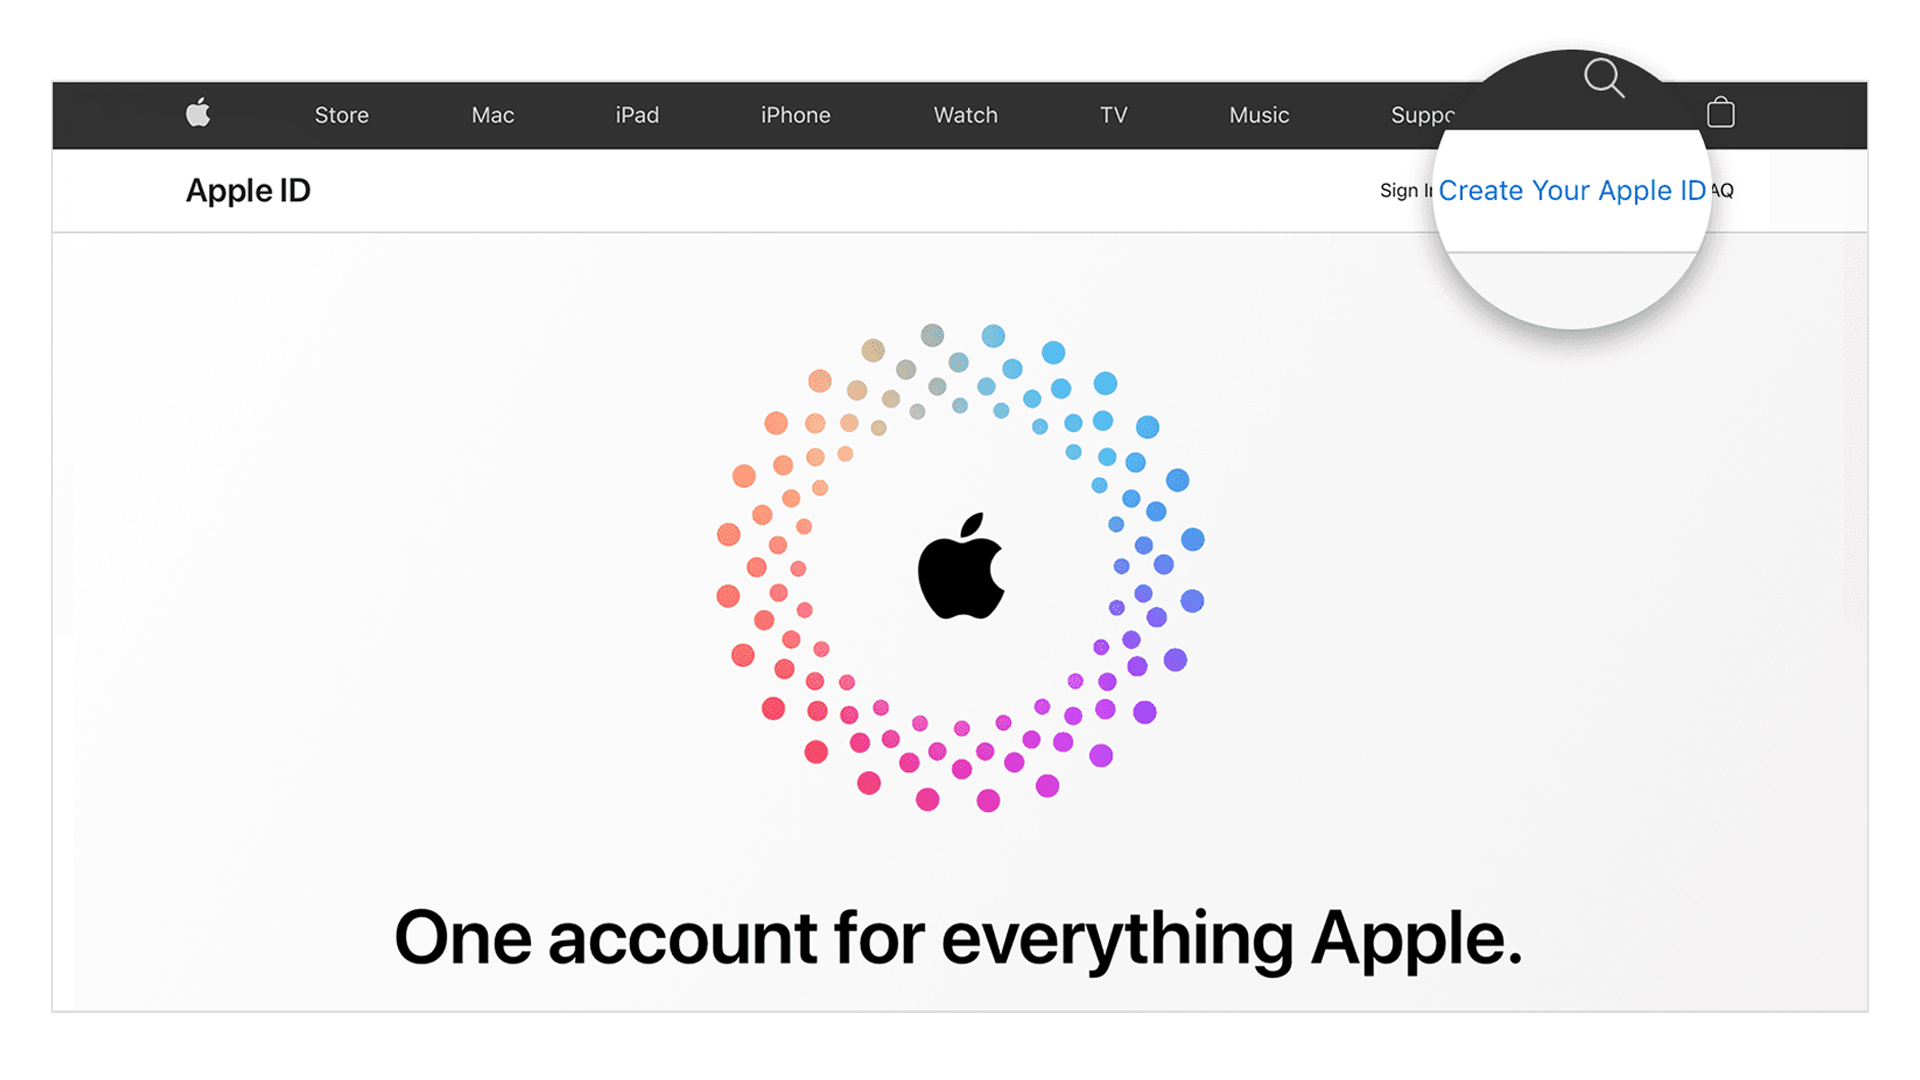 Creating an Apple ID on the web